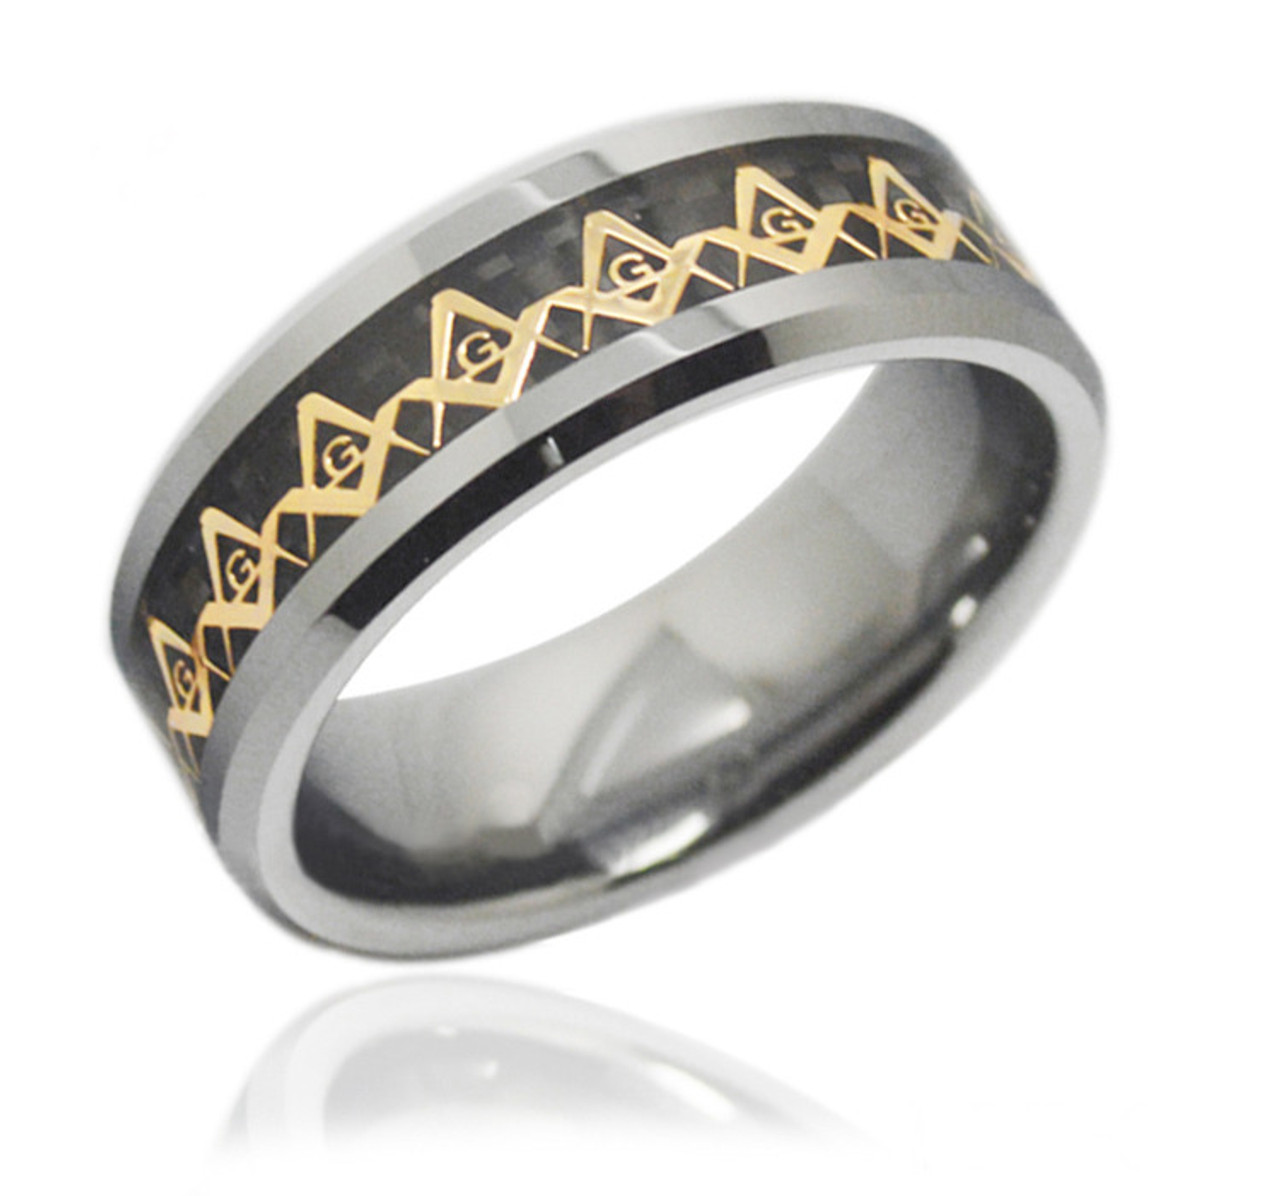 Freemason Ring / Masonic Rings - Gold and Black Inlay Tungsten Ring for Mason